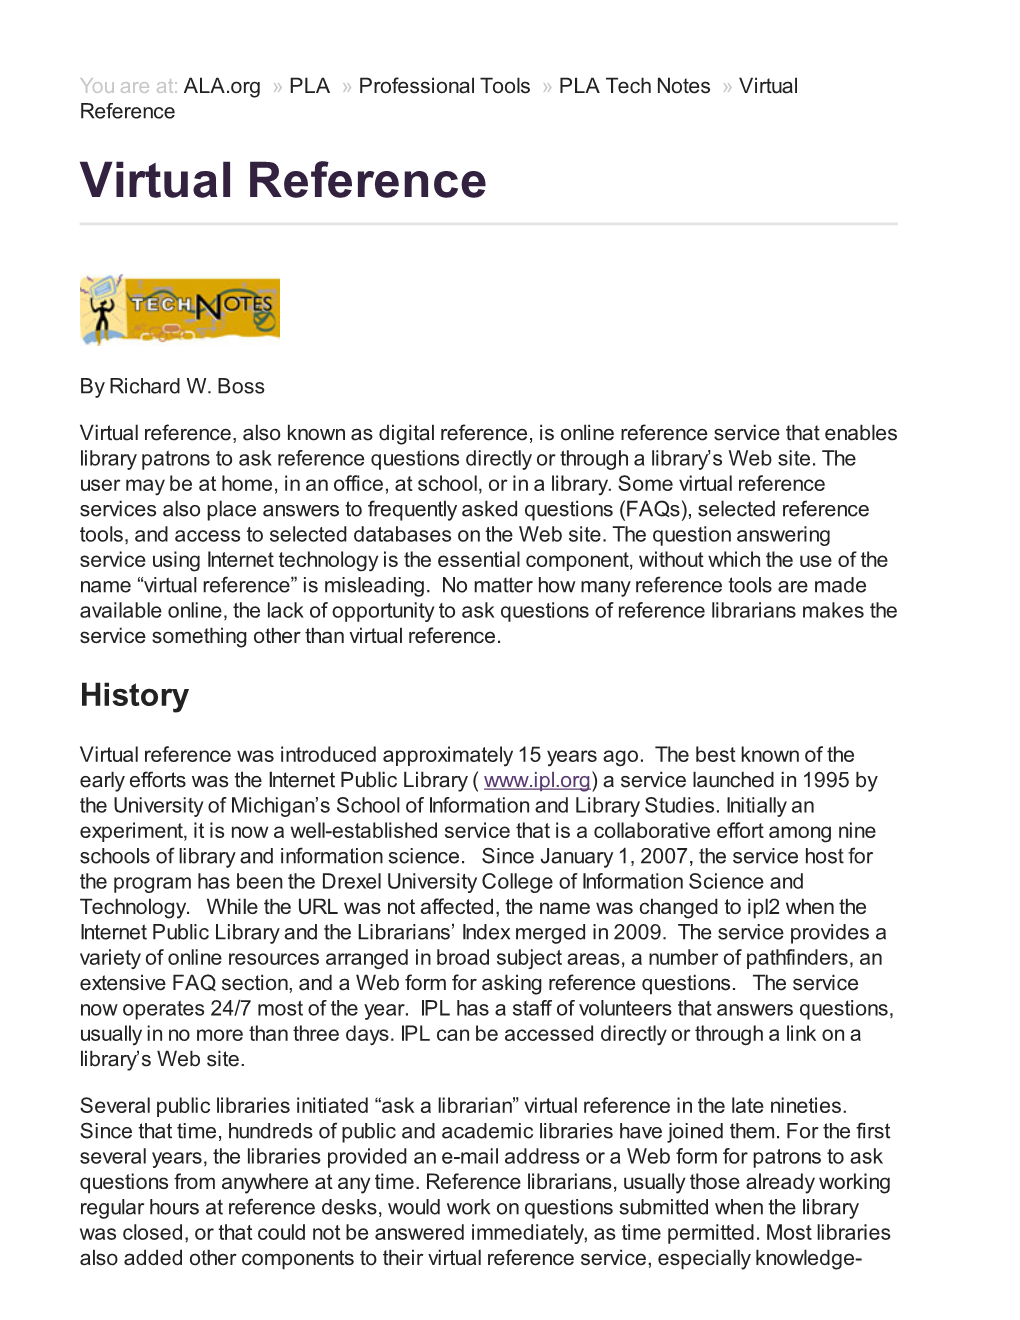 Virtual Reference Virtual Reference